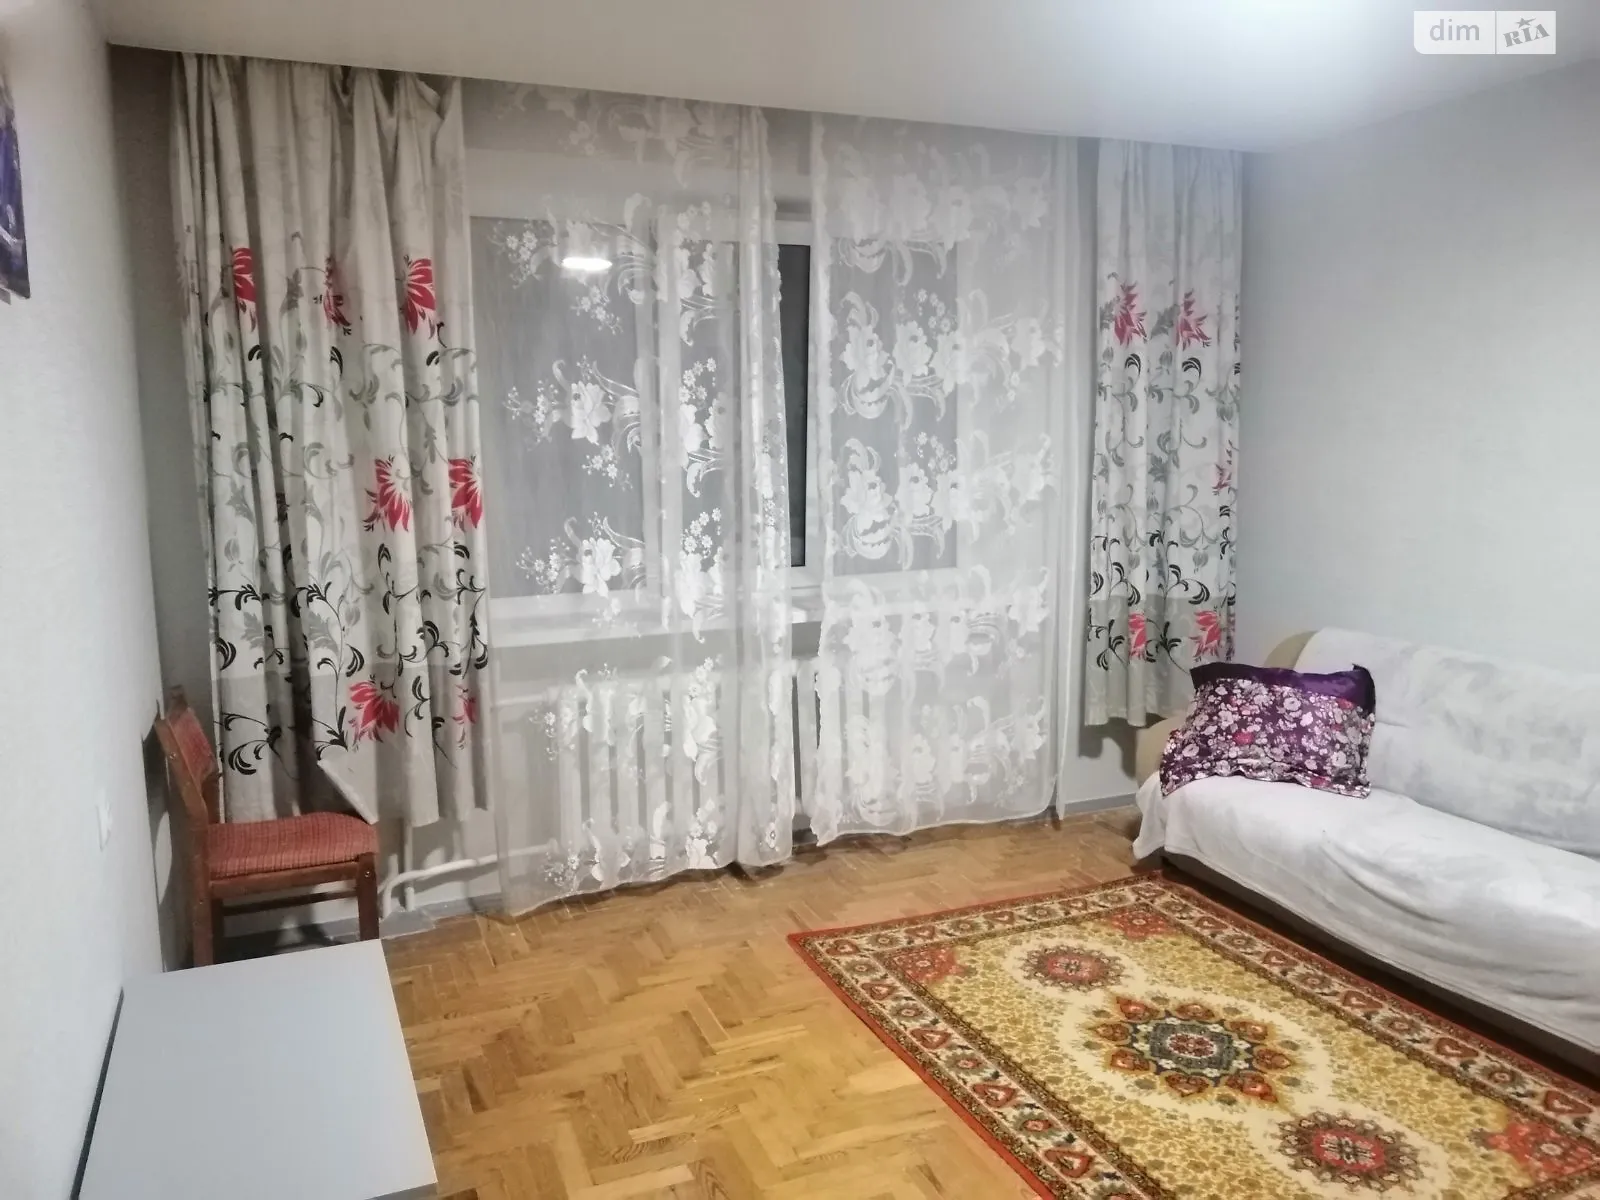 Продается комната 21 кв. м в Запорожье, цена: 7600 $ - фото 1